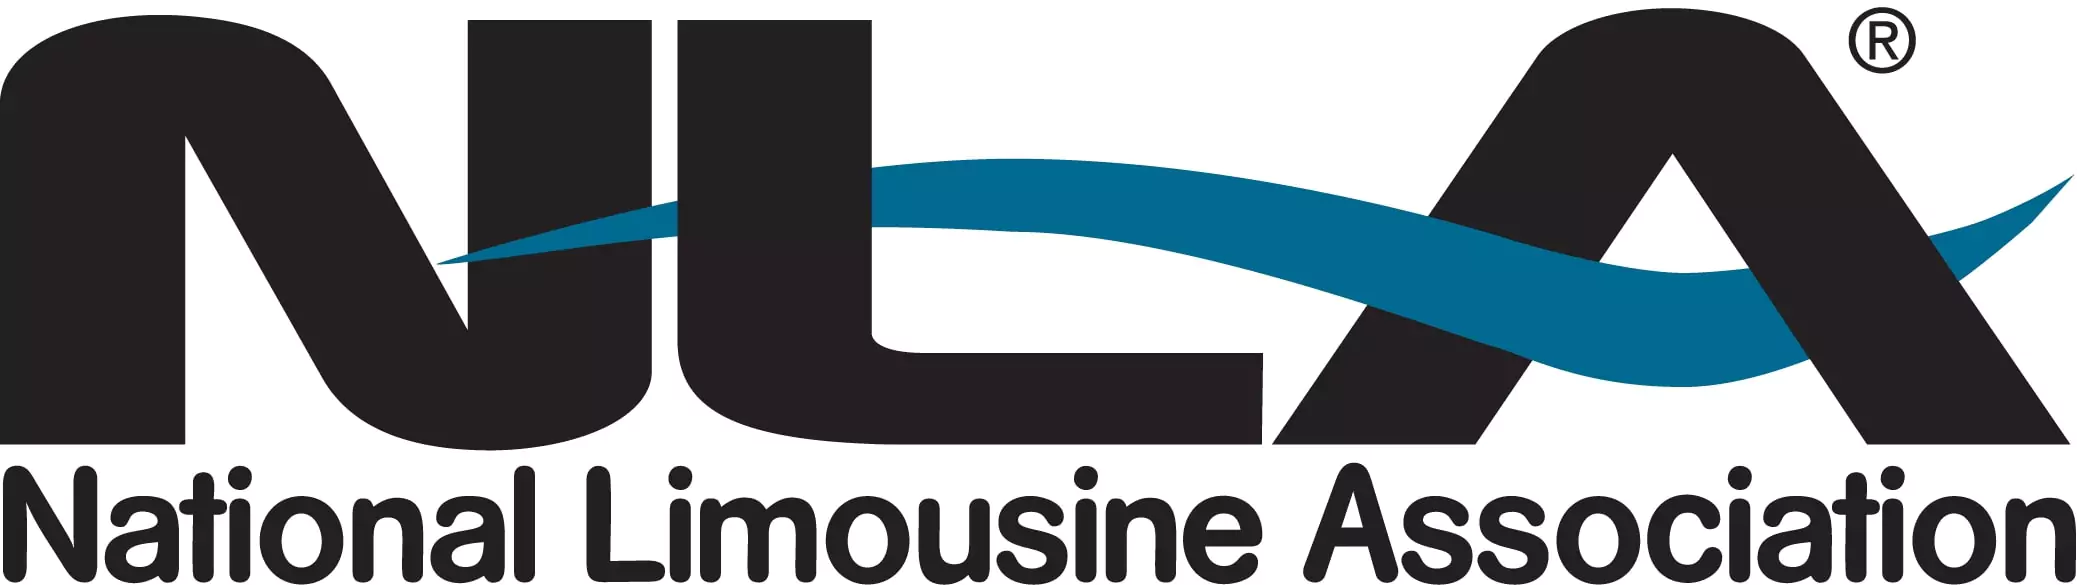 Member National Limousine Association